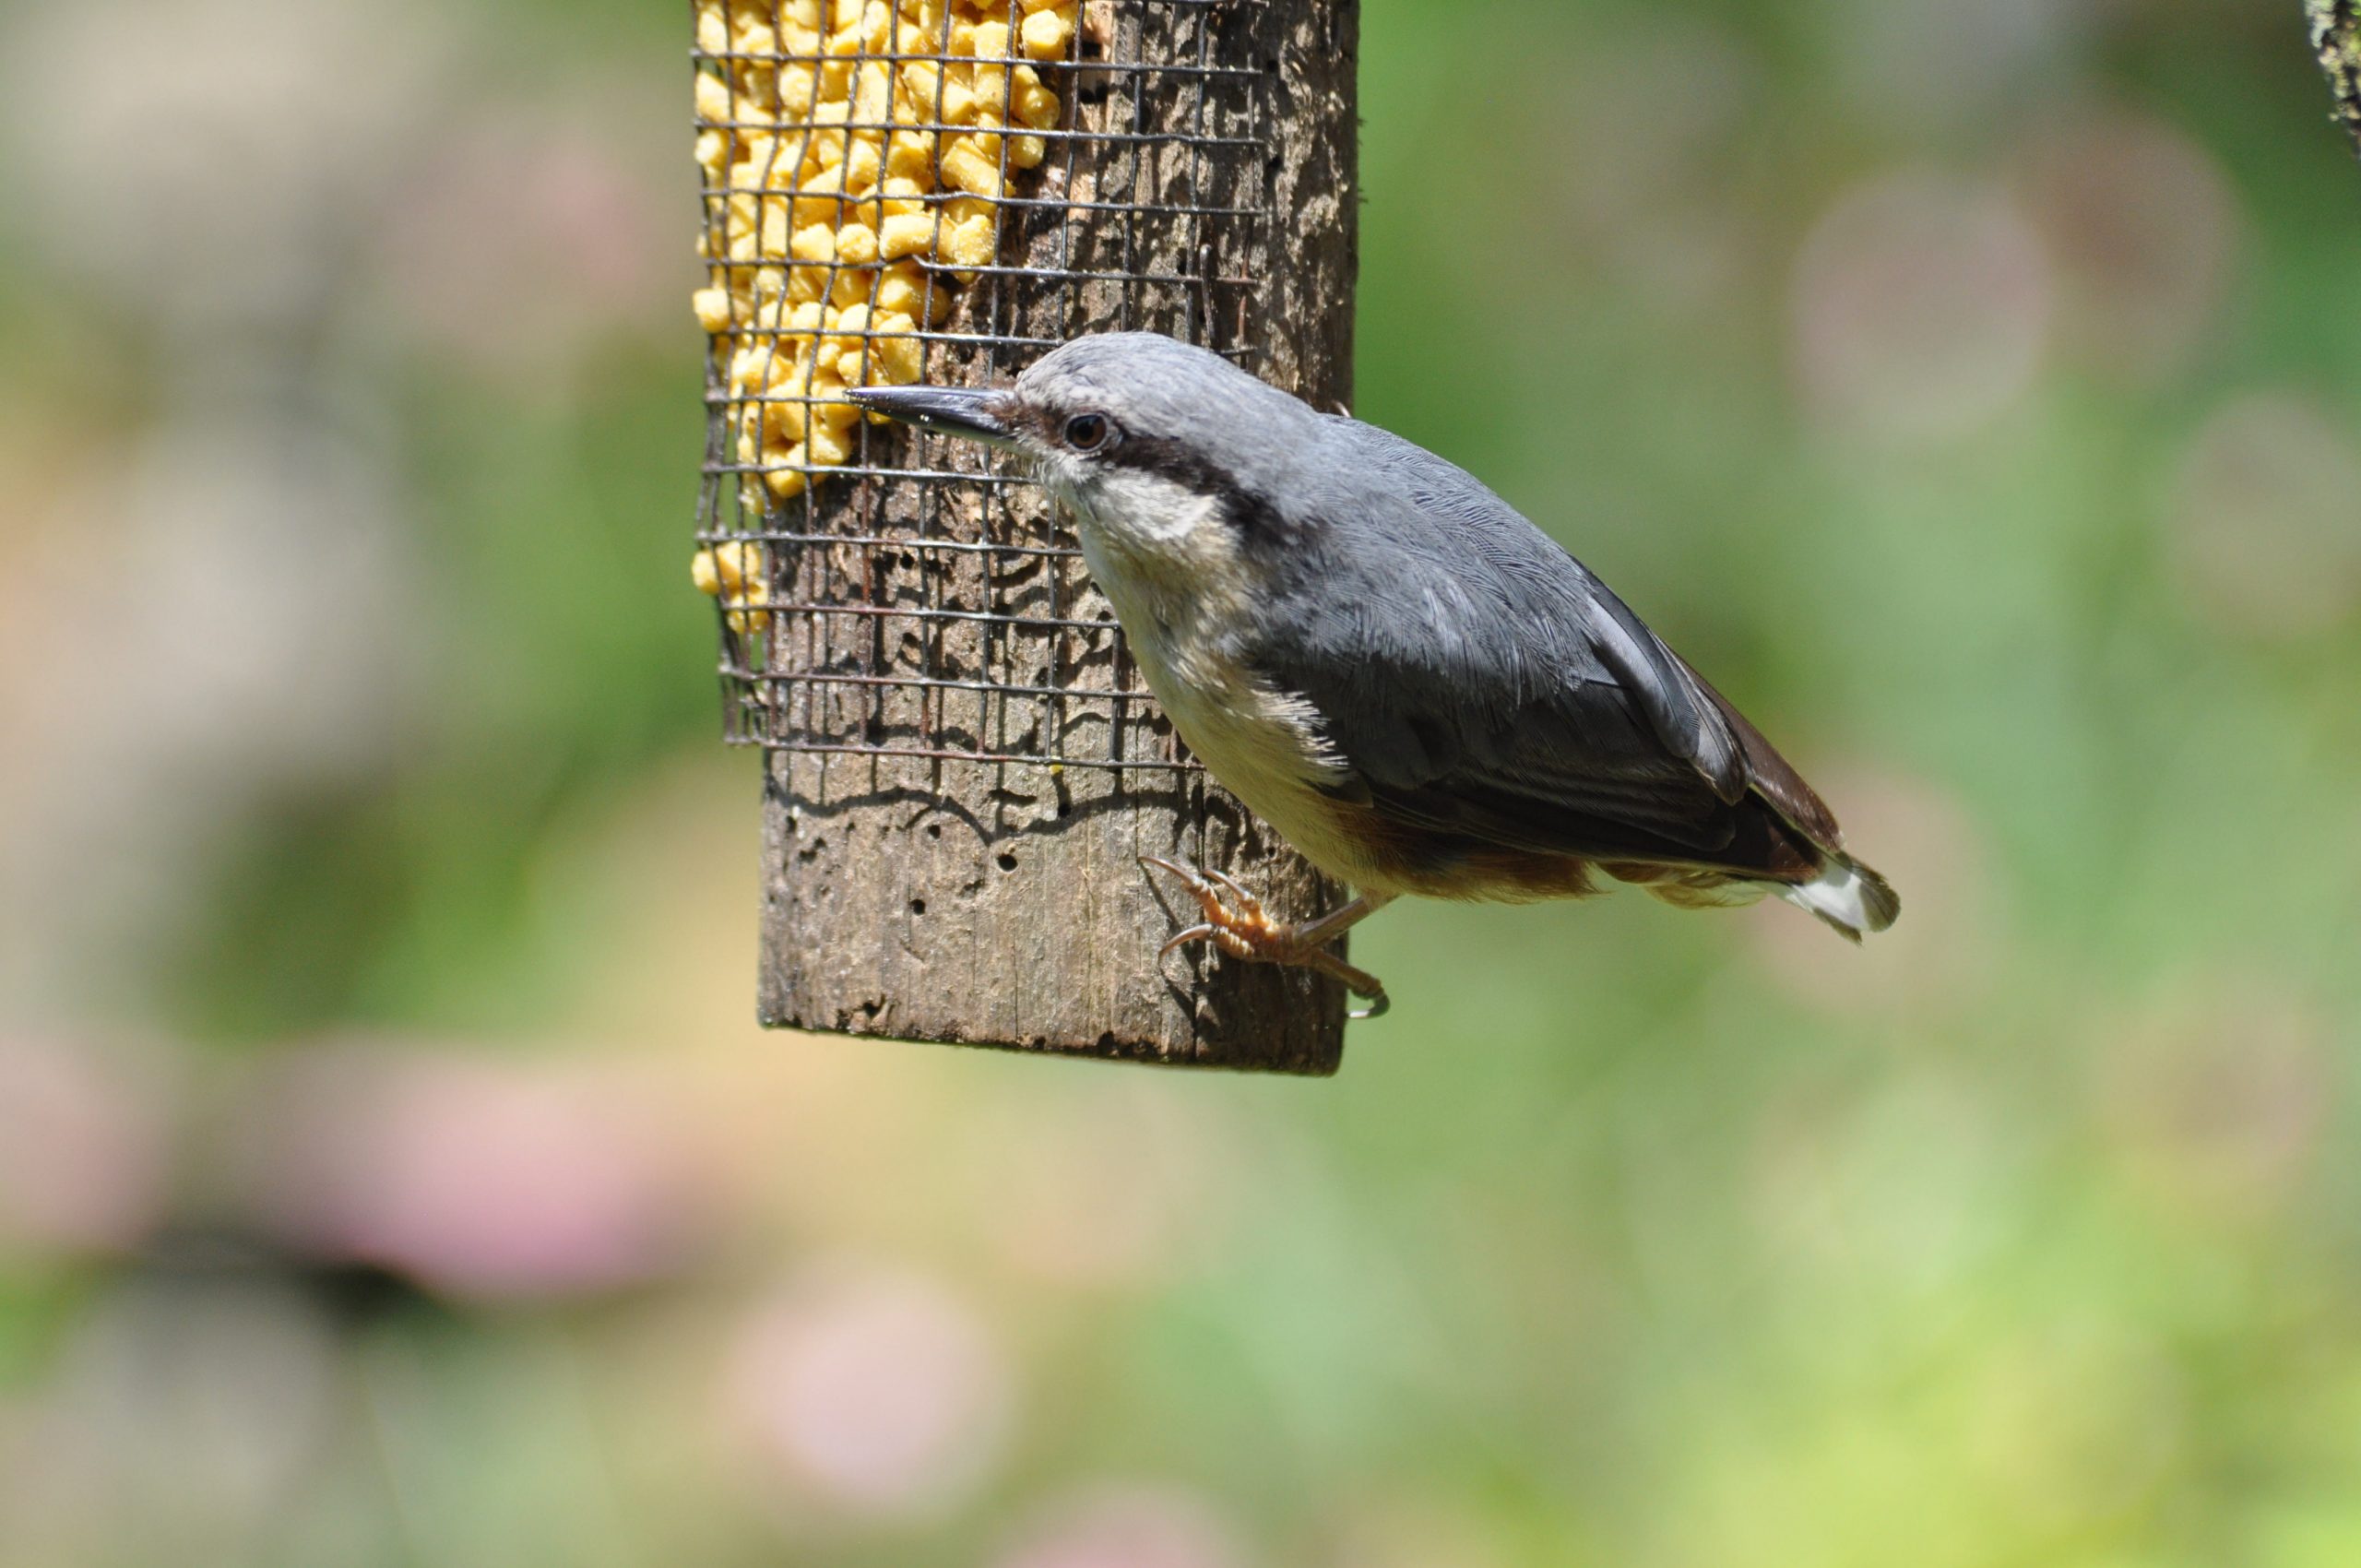 A wild bird feeds on a bird feeder.